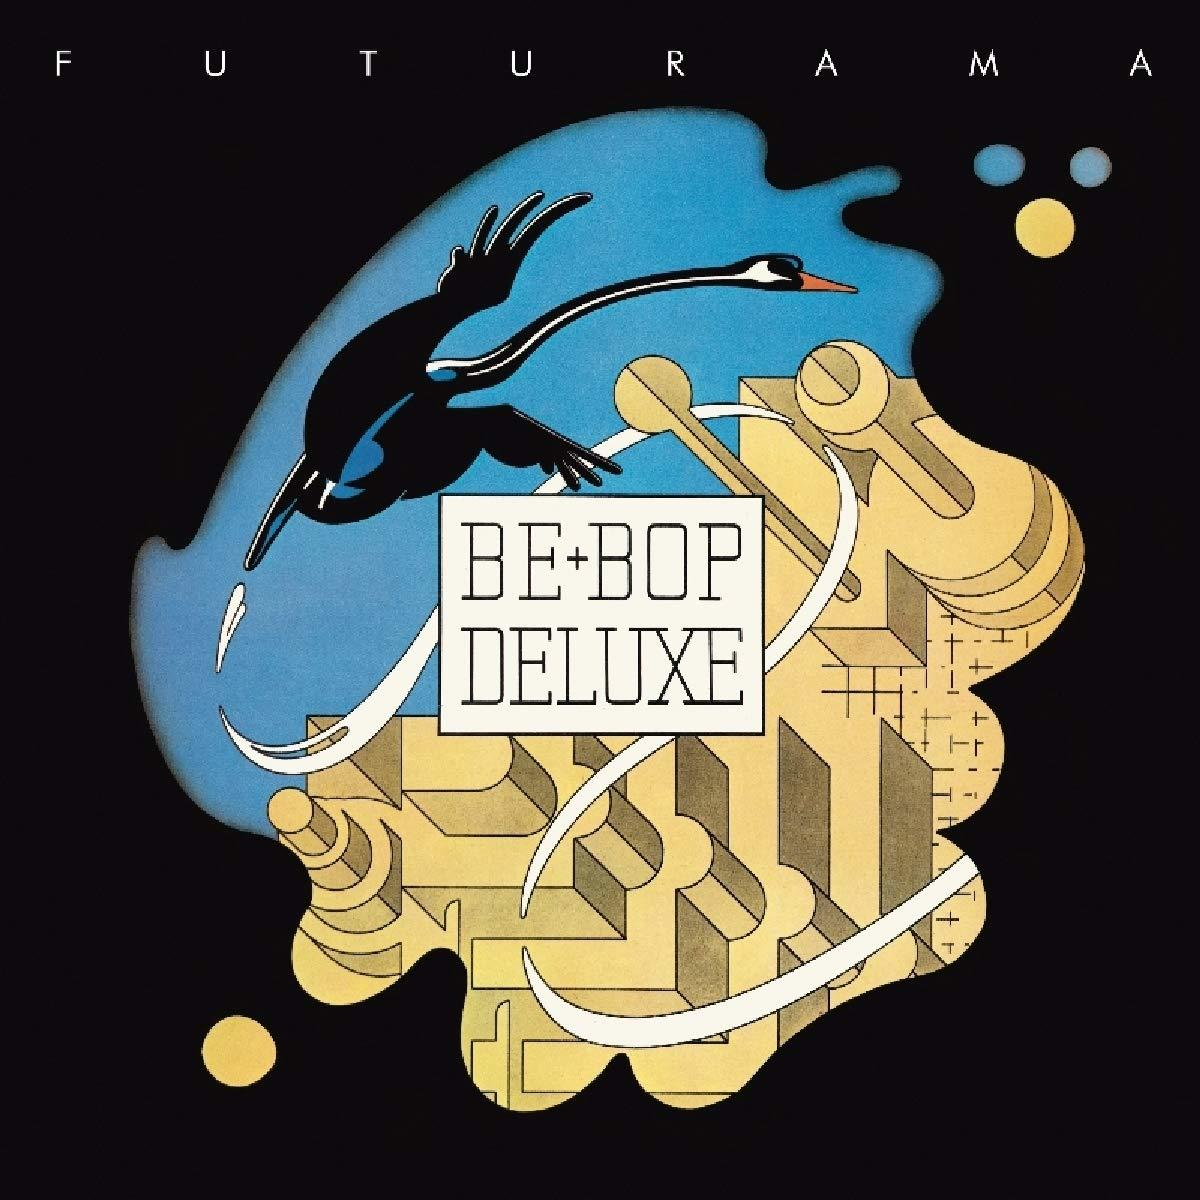 Be-Bop Deluxe Audio) (lim (CD - - + DVD Futurama 3CD/DVD)